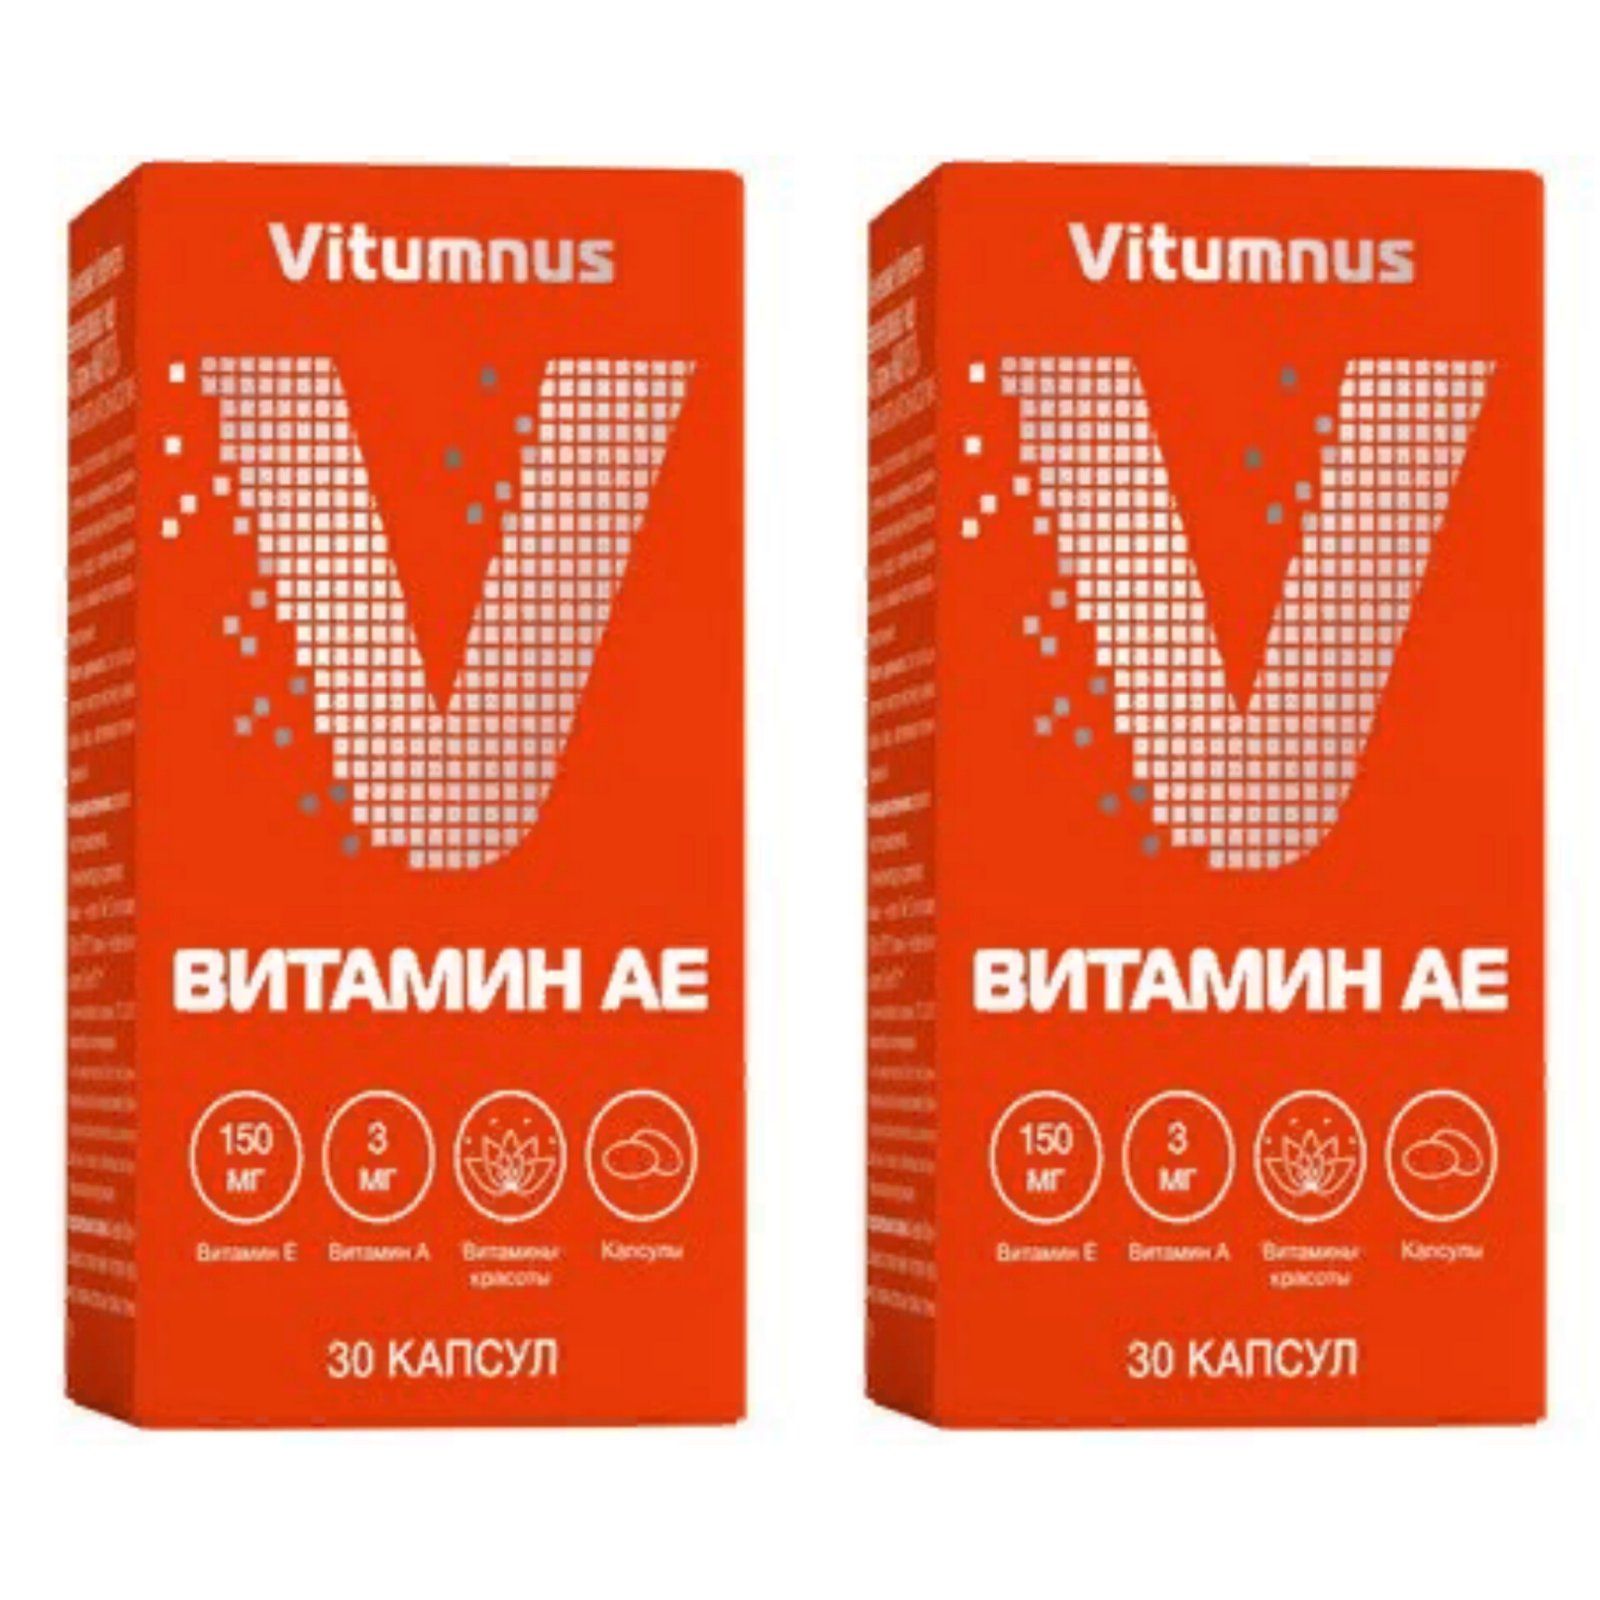 Vitumnus д3 витамин. Vitumnus витамины. Vitumnus AE. Vitumnus Energy Complex. Vitumnus, витамин ае.